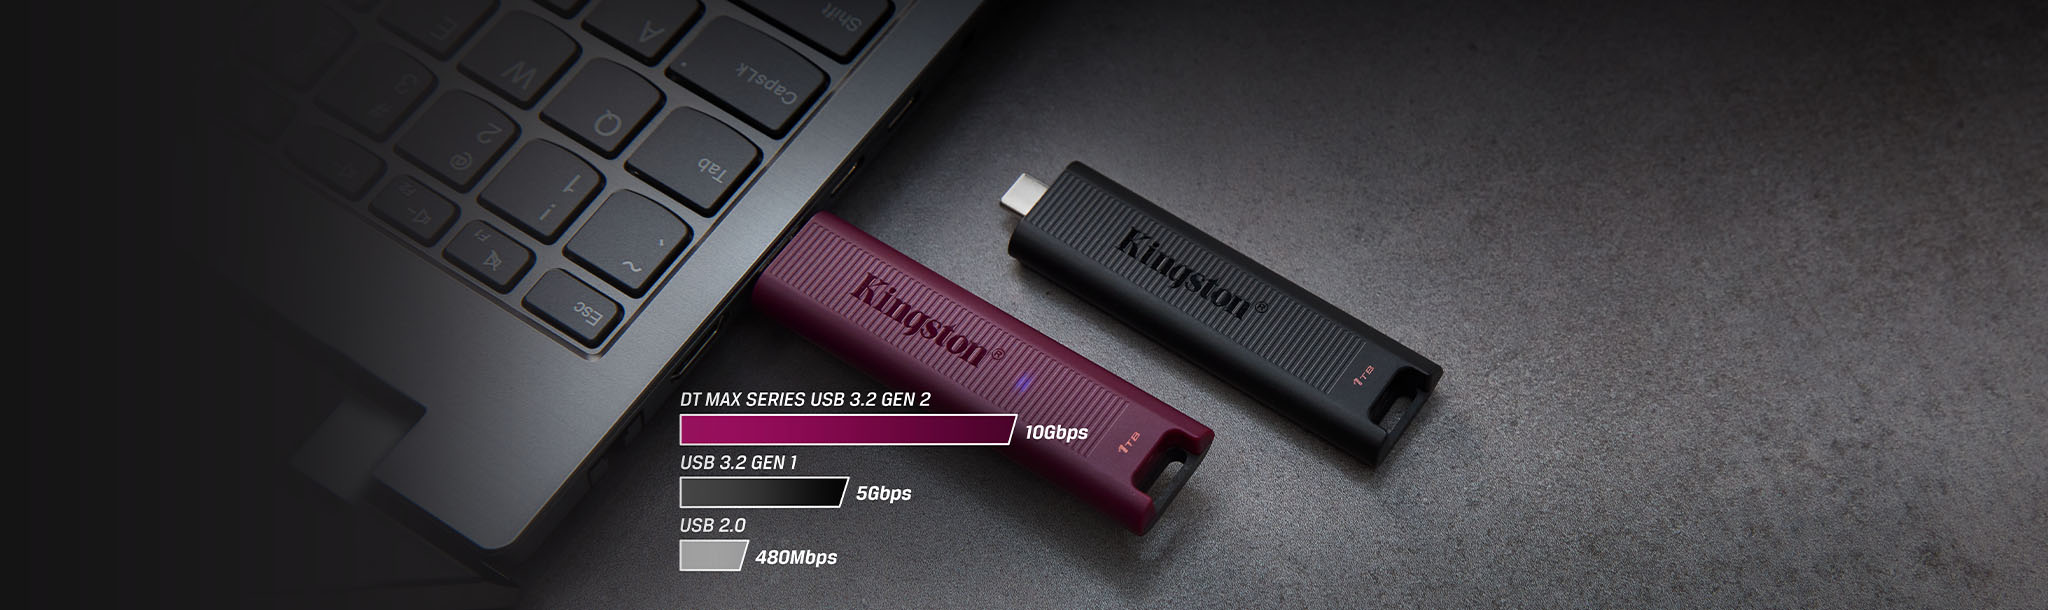 Kingston DataTraveler Max - Type-A USB 3.2 Gen 2 / 256GB storage / Up to 1,000MB per second Read / functional keyring loop - DTMAXA/256GB - Amman Jordan - Pccircle